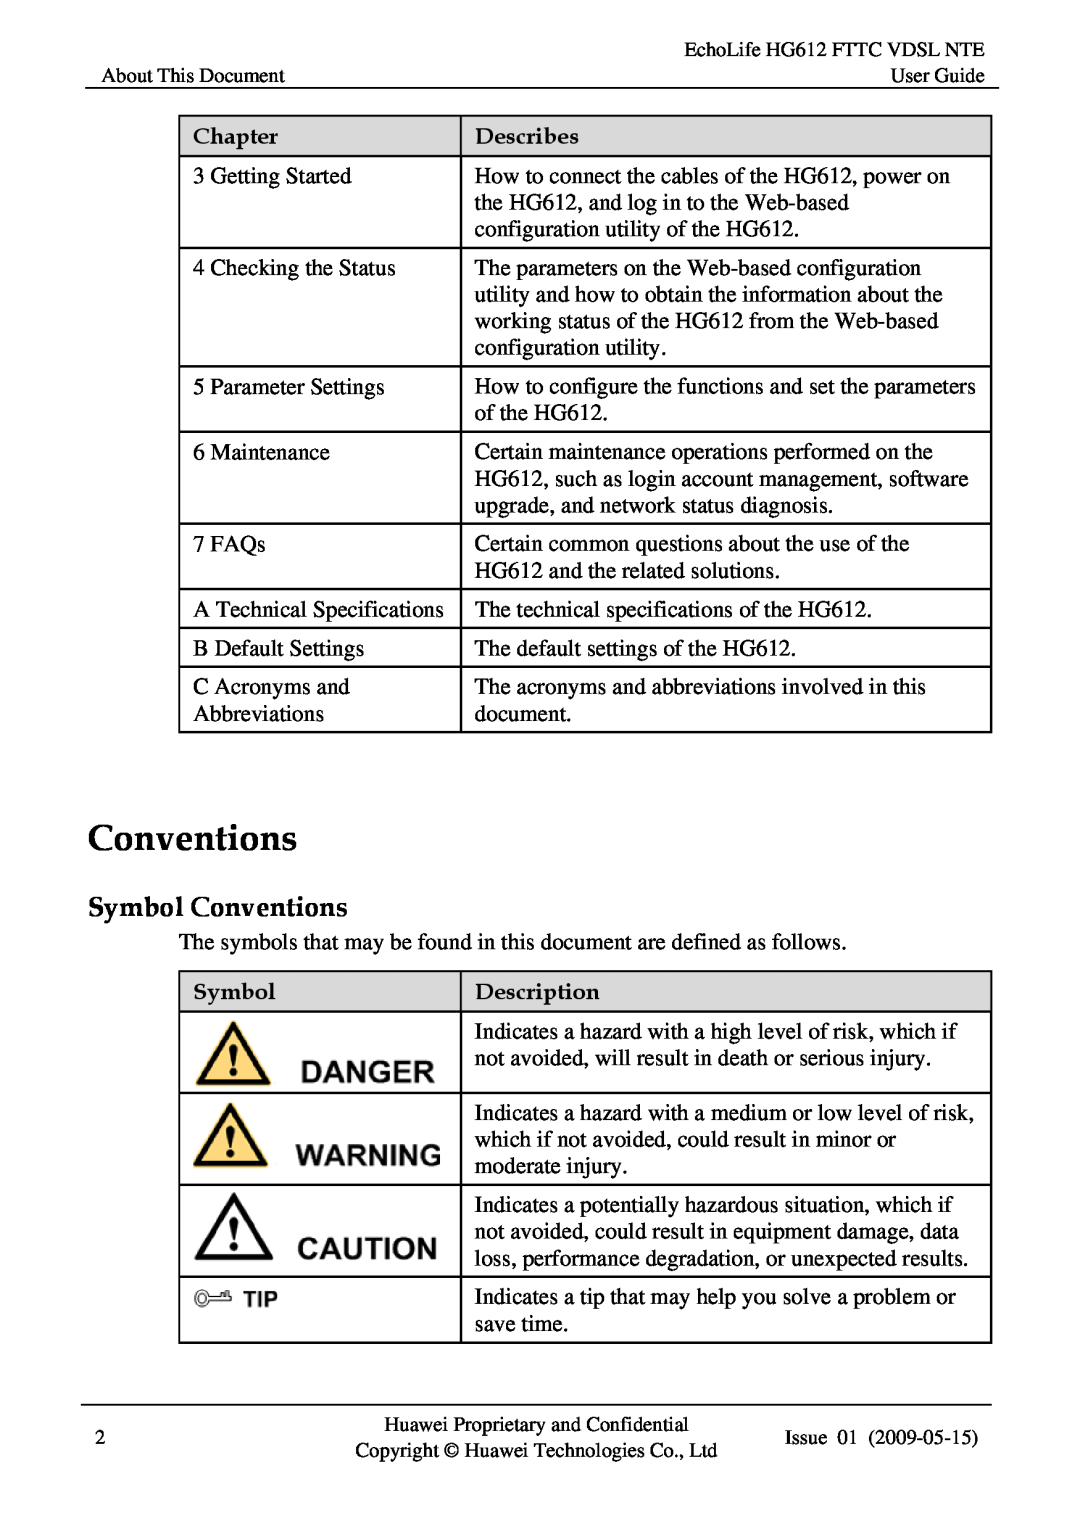 Huawei HG612FTTC VDSL NTE manual Symbol Conventions, Chapter, Describes, Description 